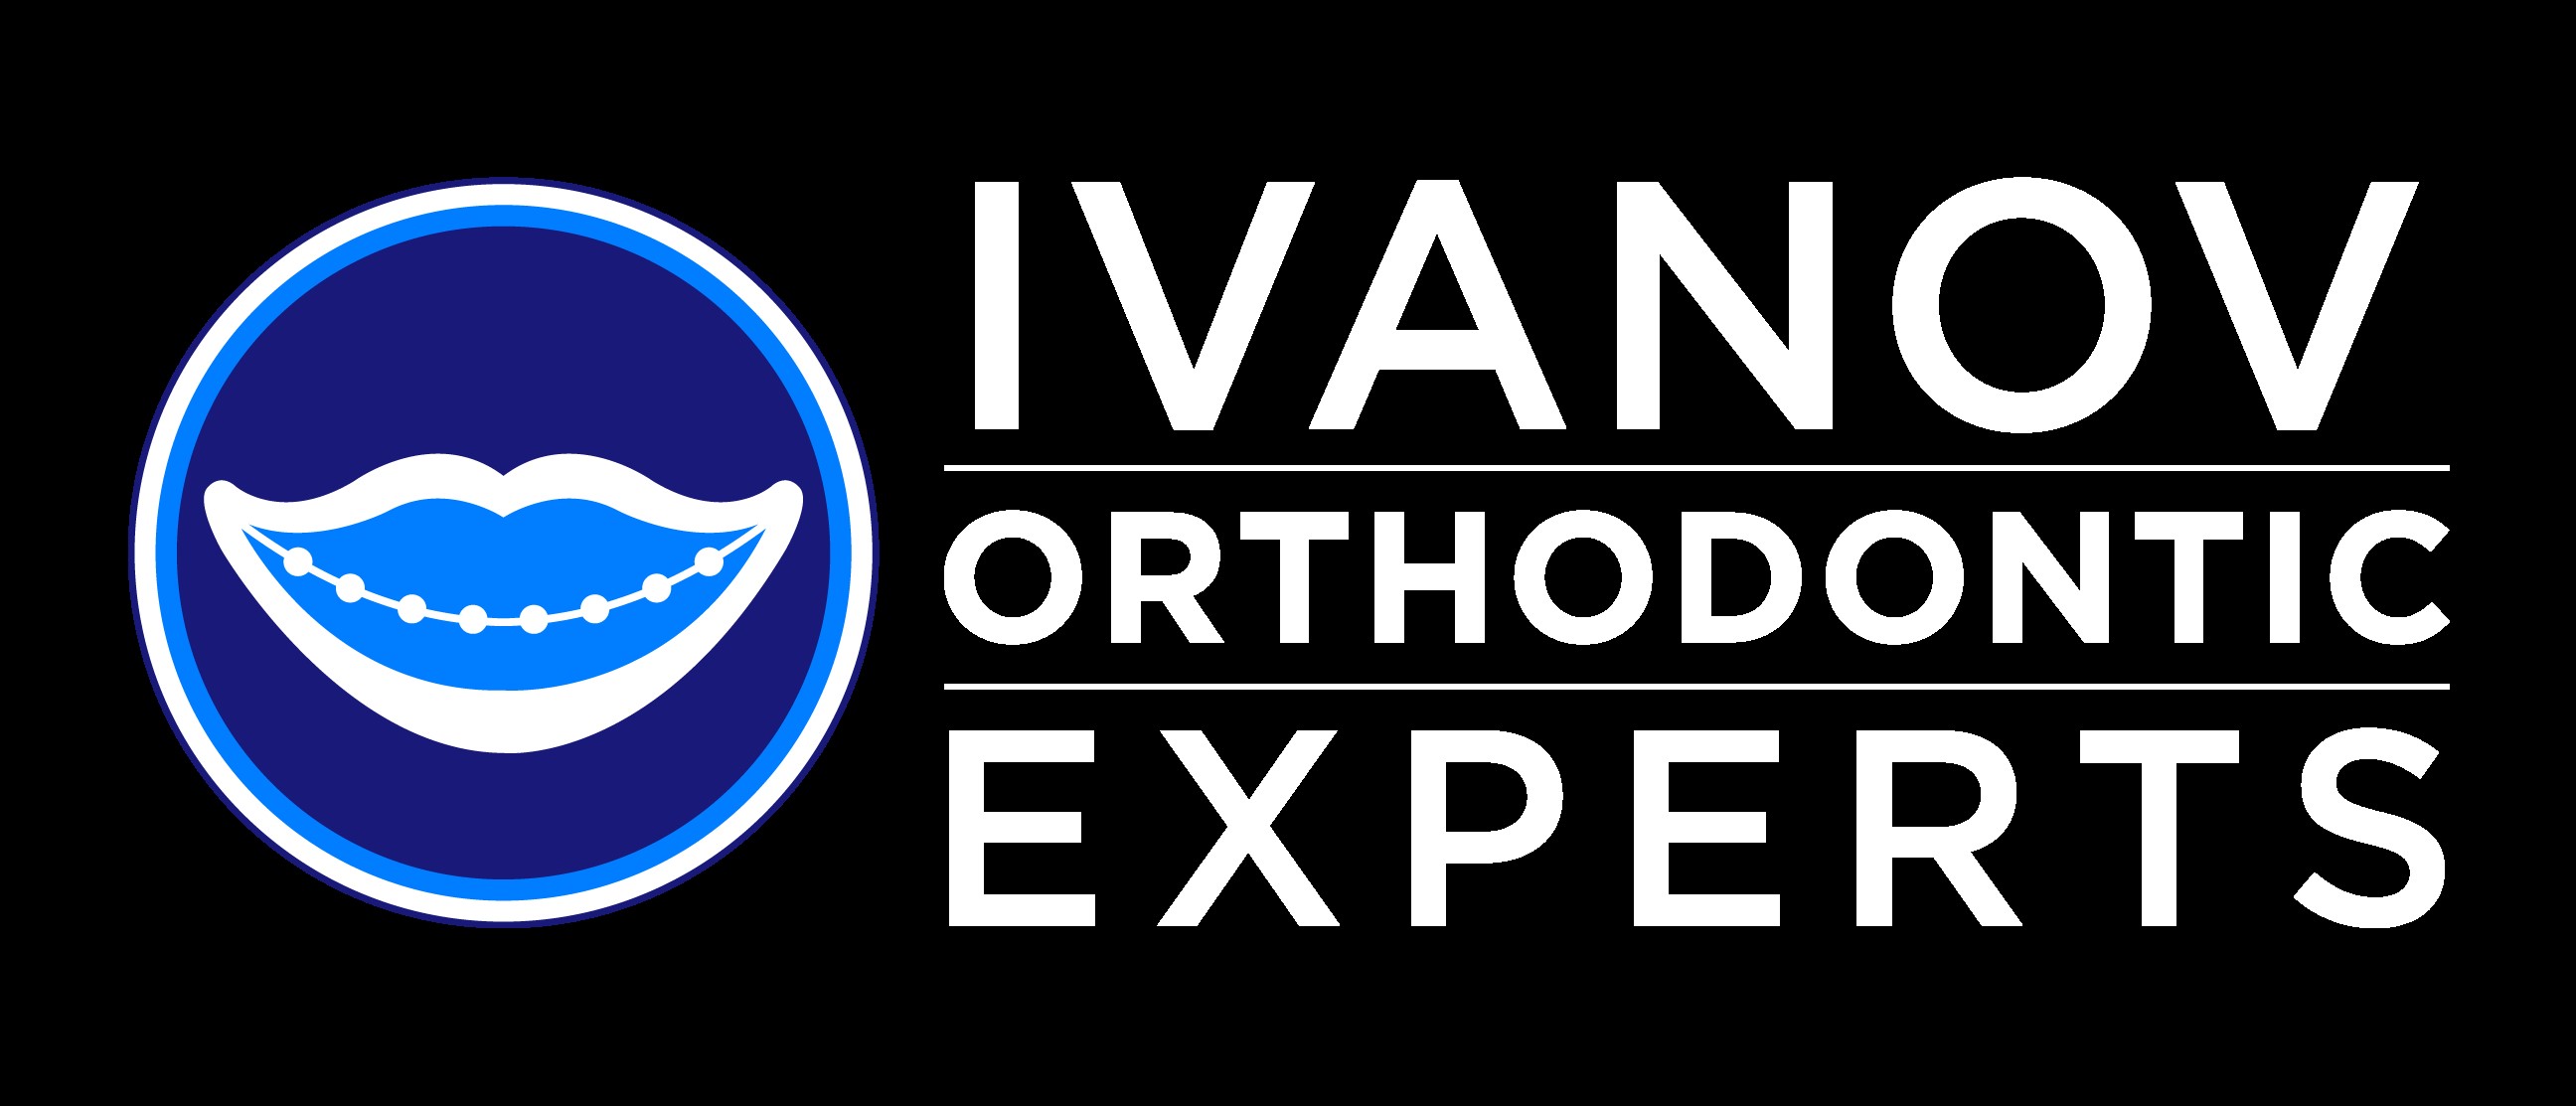 Ivanov_Orthodontic_Experts.jpg